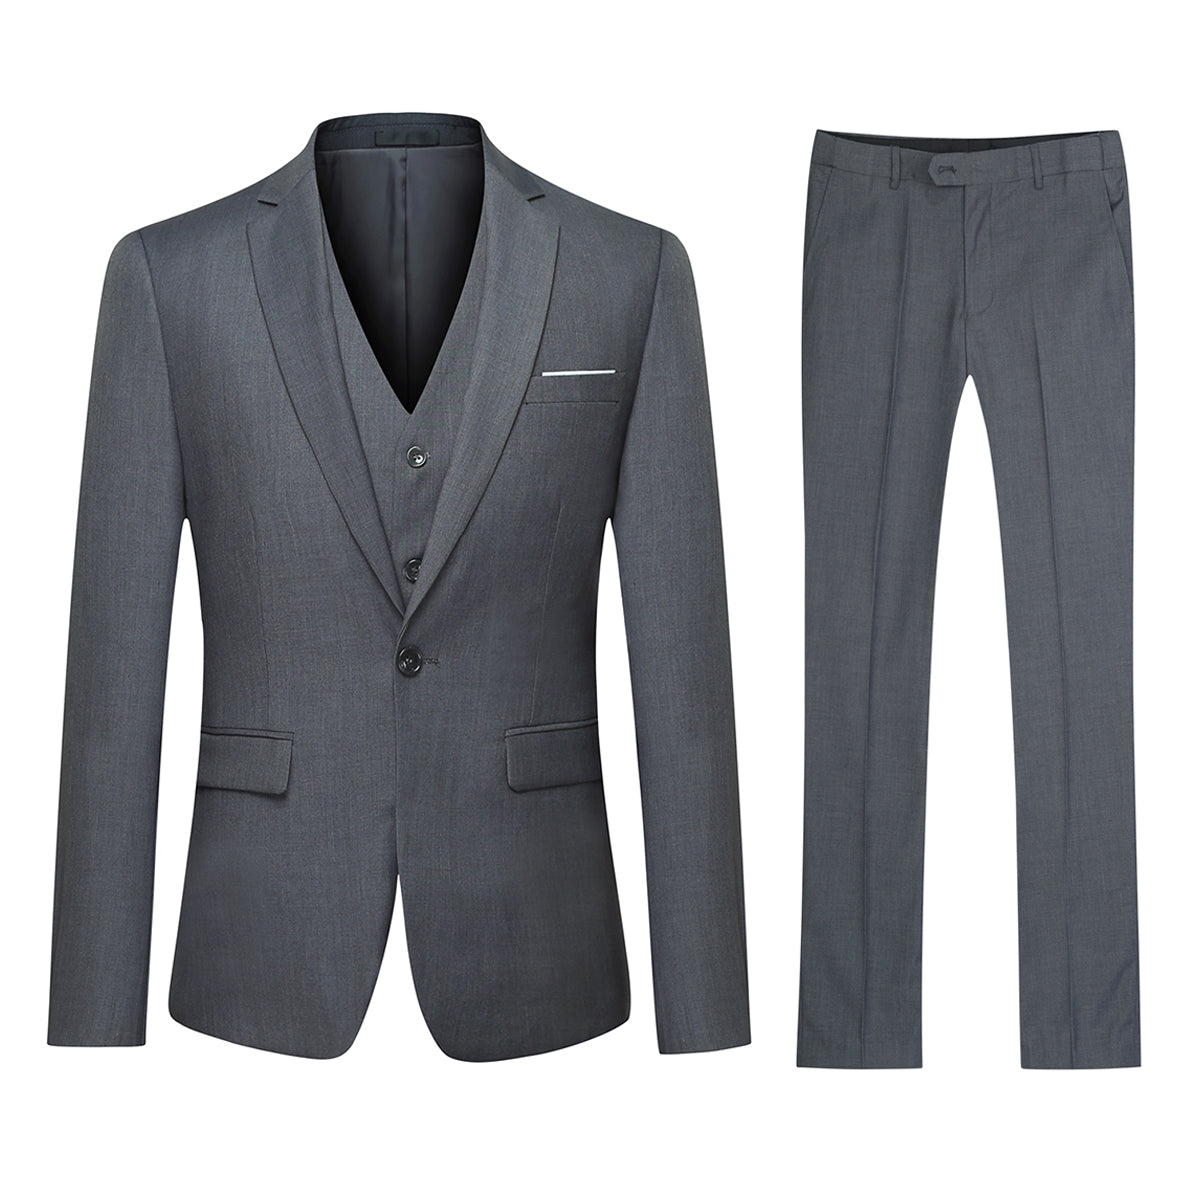 Elegant Dove Grey 3-Piece Suit - Classic One-Button Design